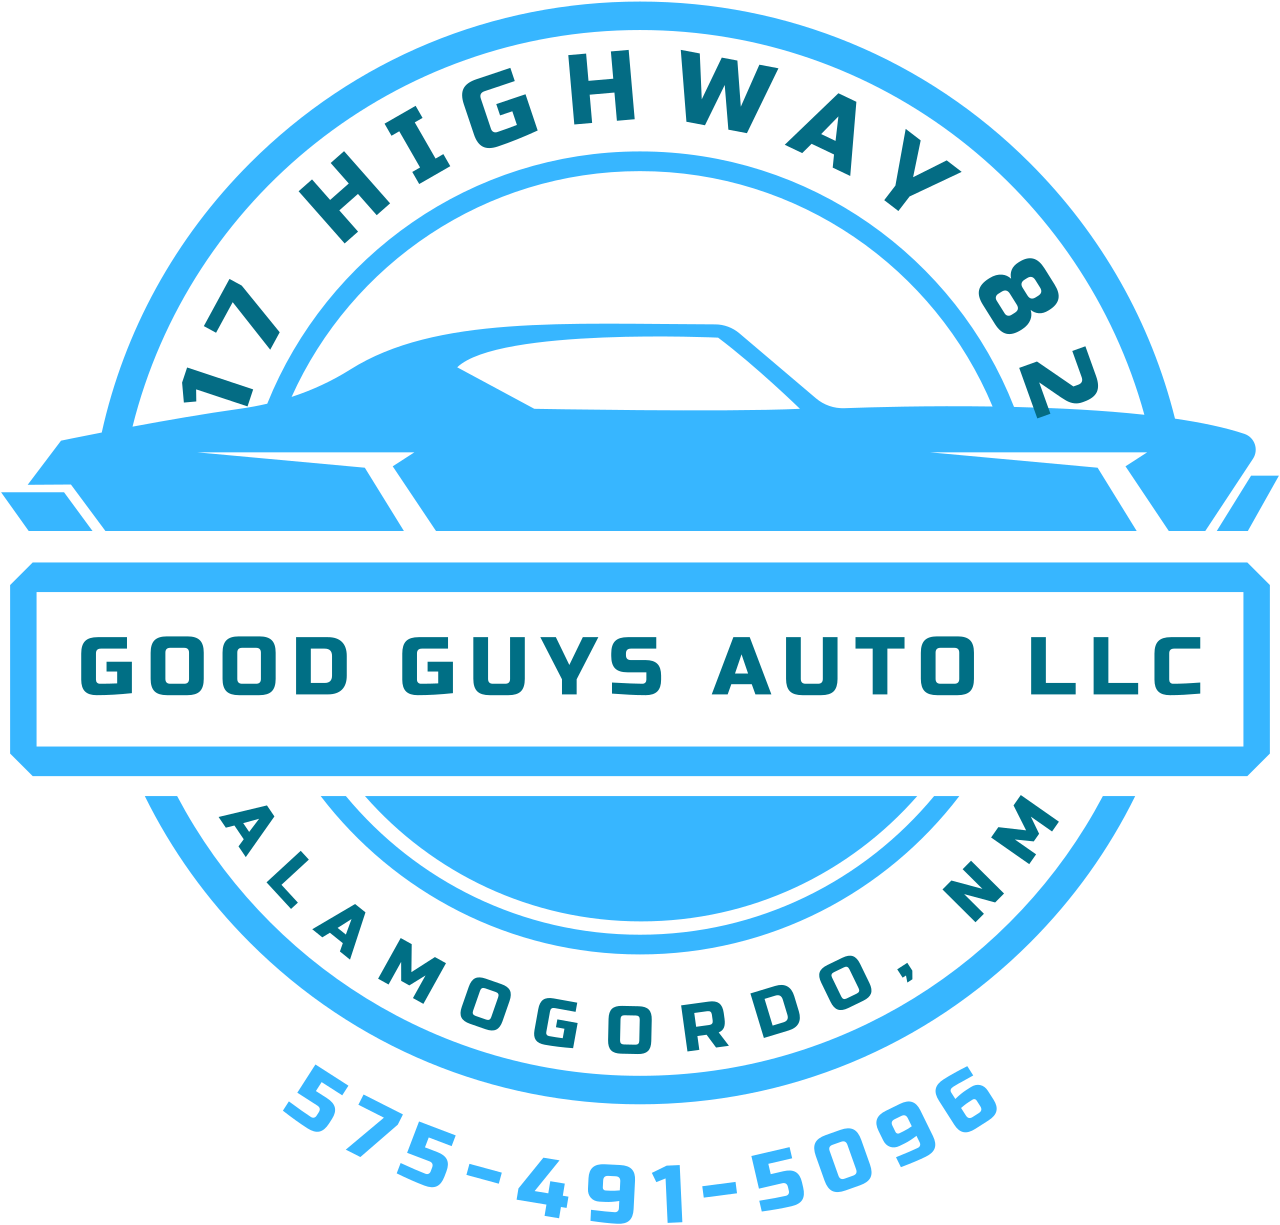 Good Guys Auto LLC's web page